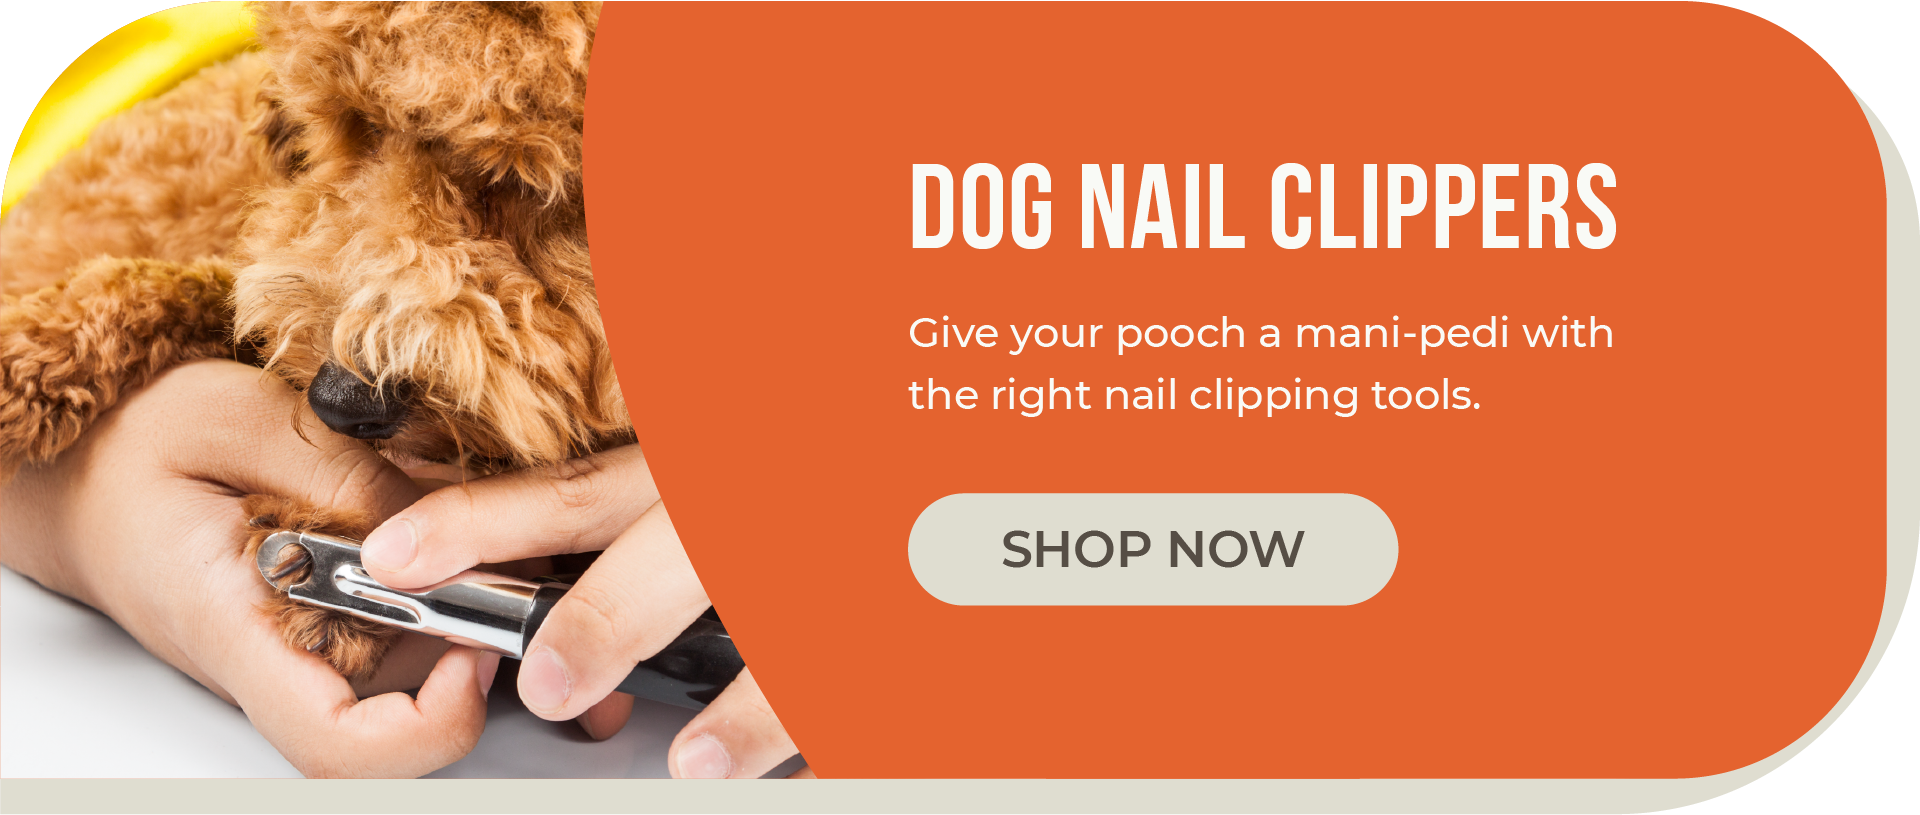 Nail clipper - Wikipedia